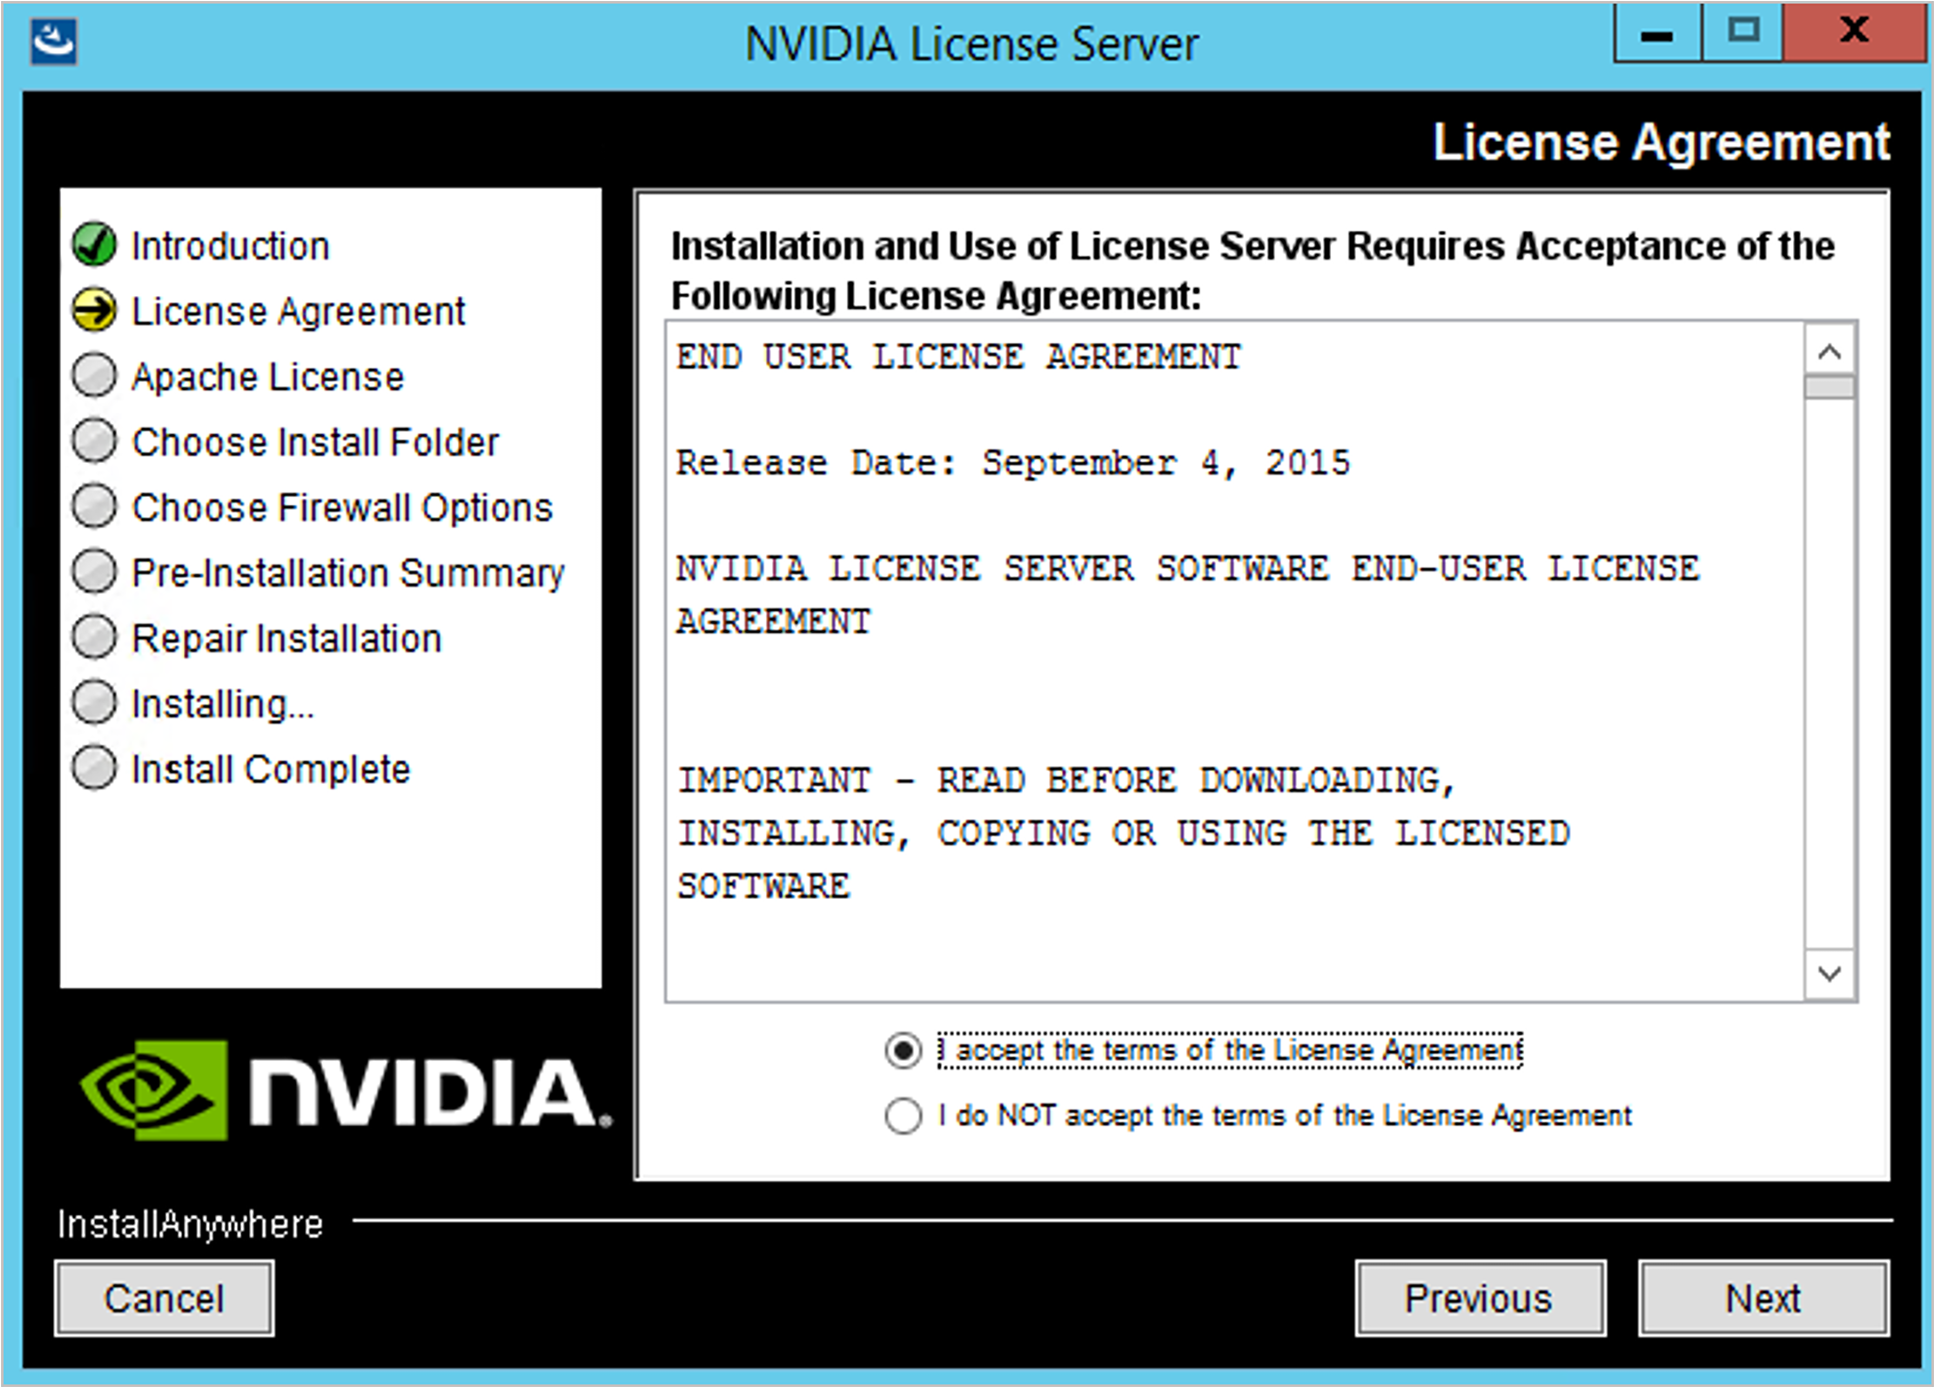 NVIDIA License Agreement screen